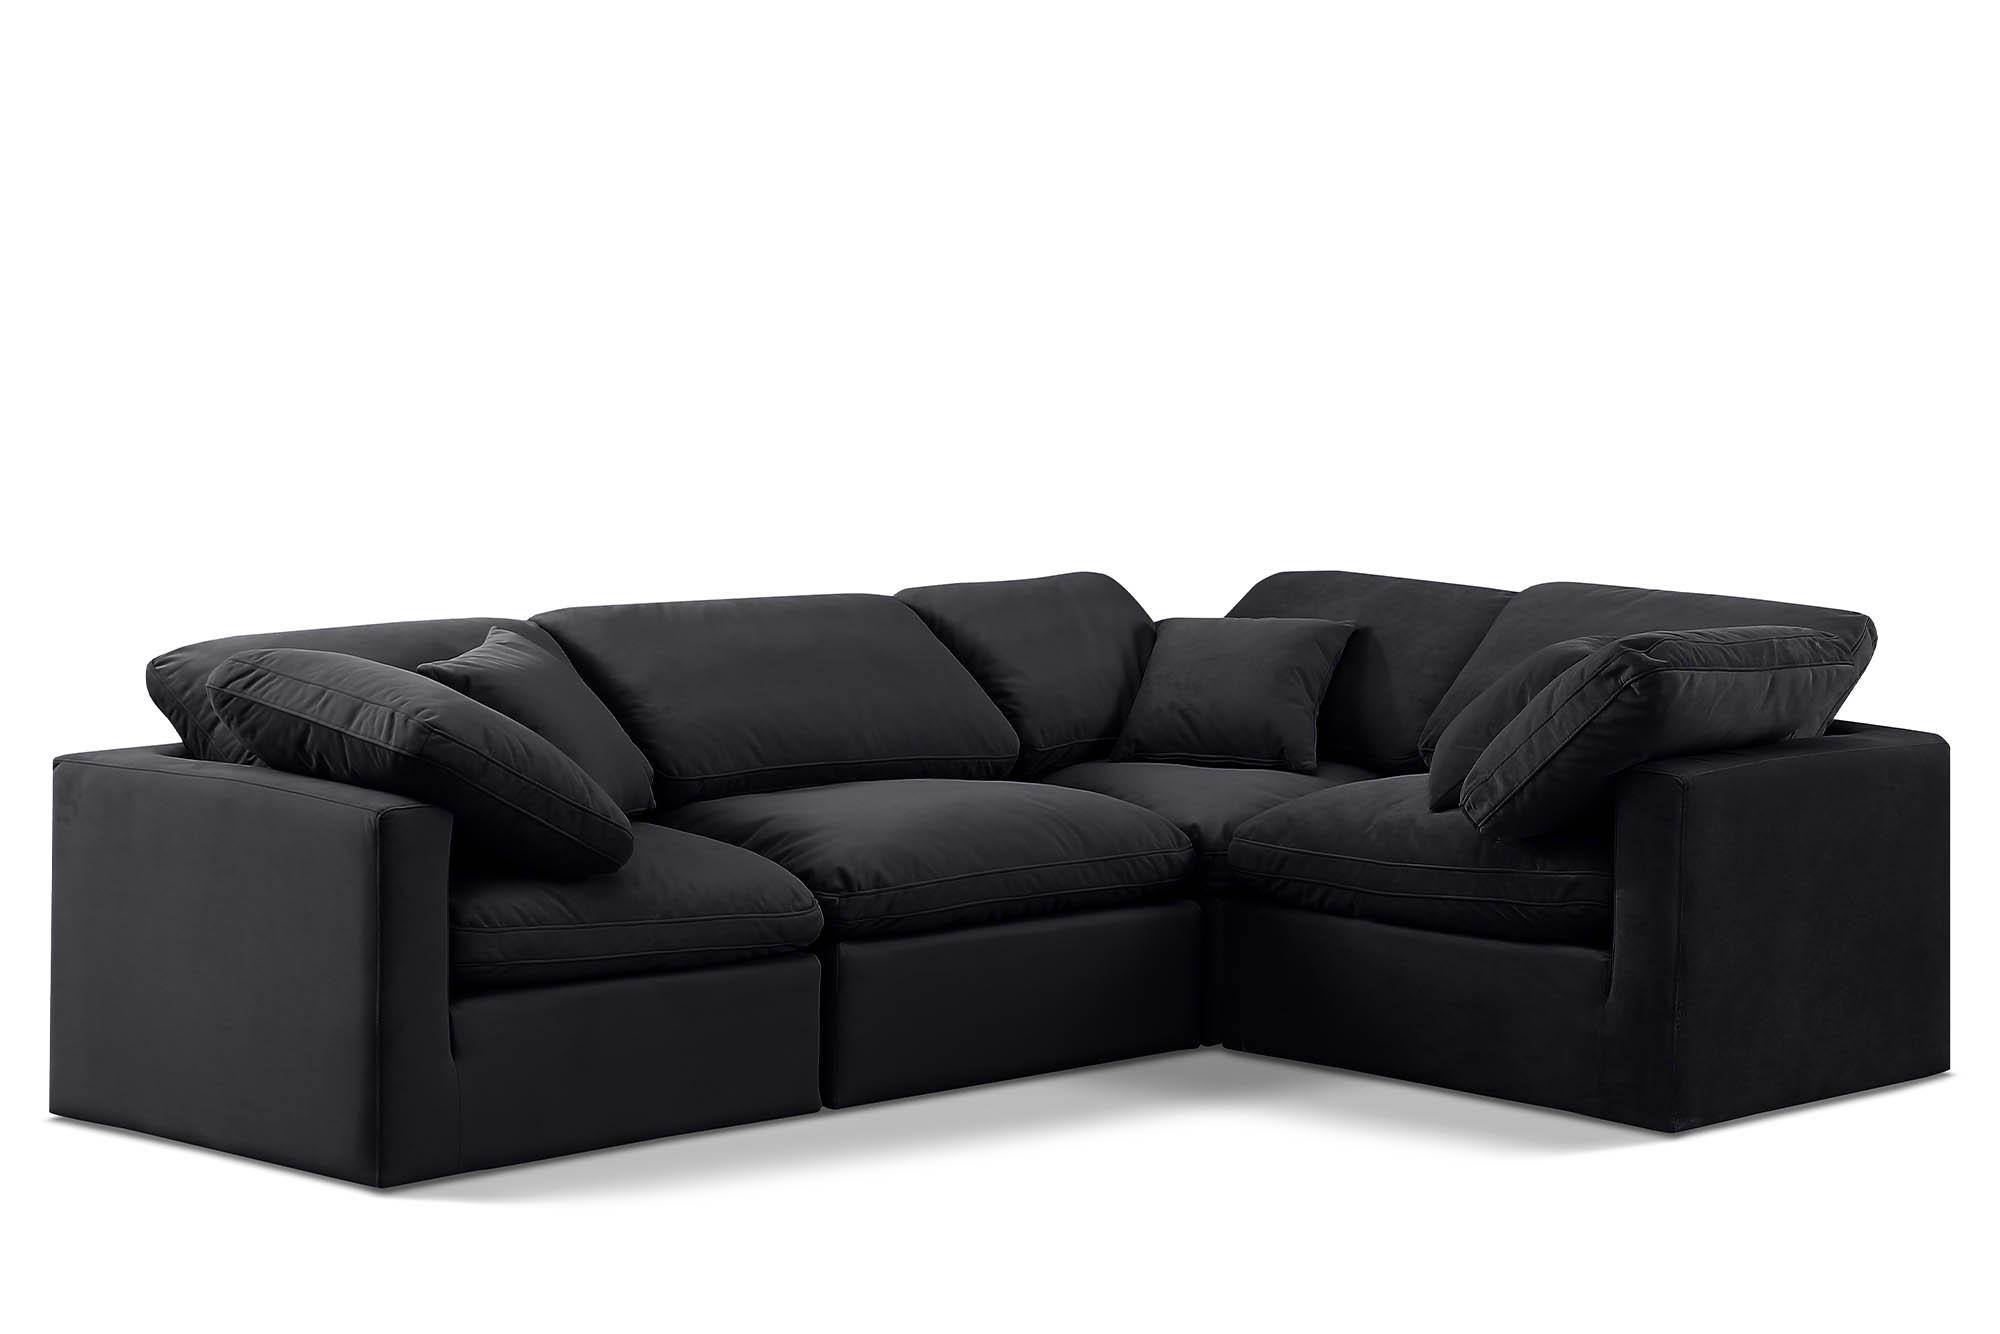 Contemporary, Modern Modular Sectional Sofa INDULGE 147Black-Sec4C 147Black-Sec4C in Black Velvet